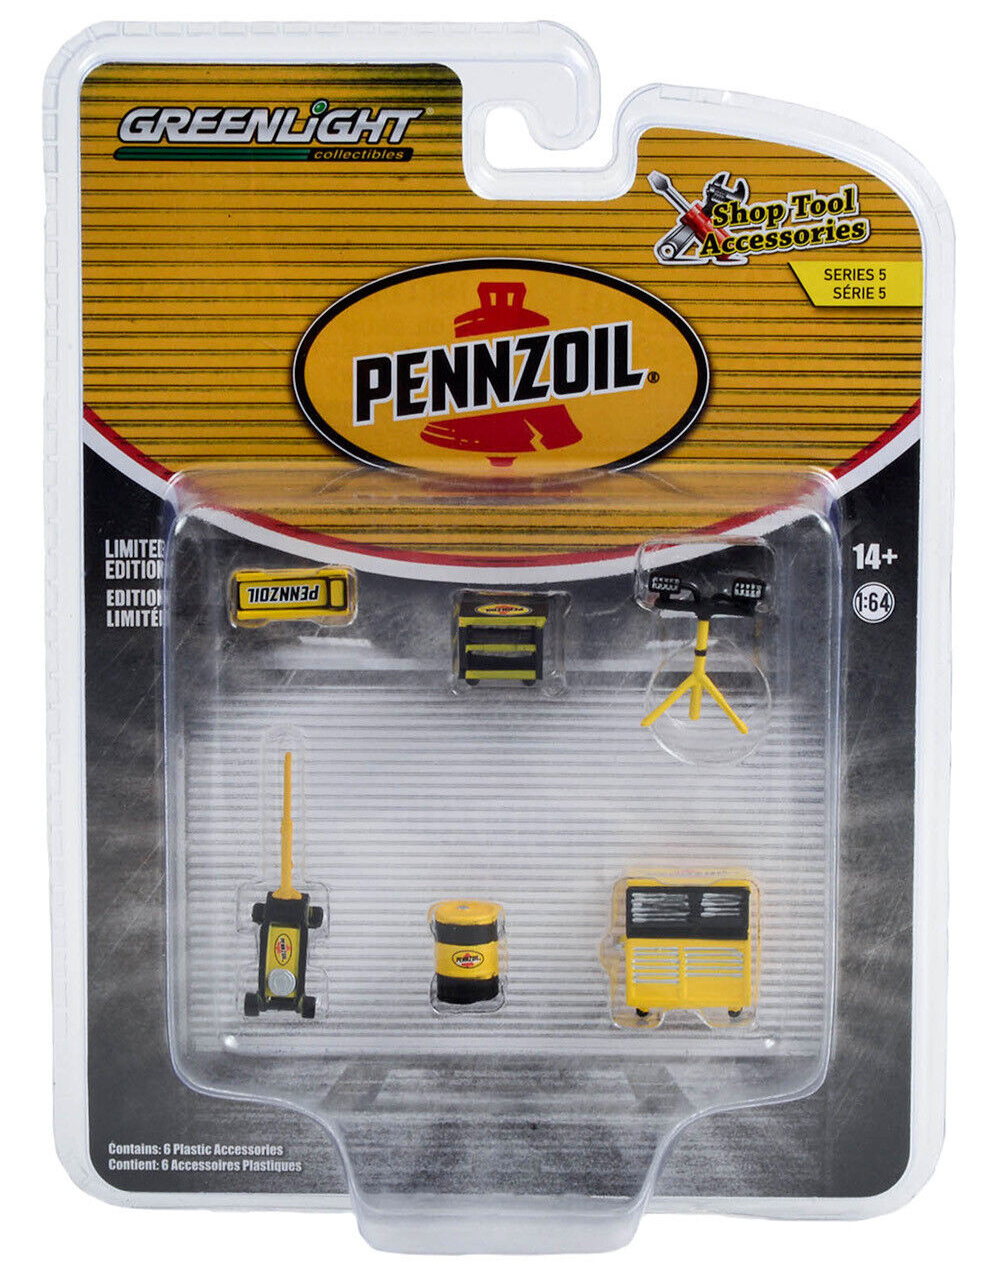 1:64 Pennzoil Series 5 Workshop Shop Tool Set 6 pcs. Greenlight figure